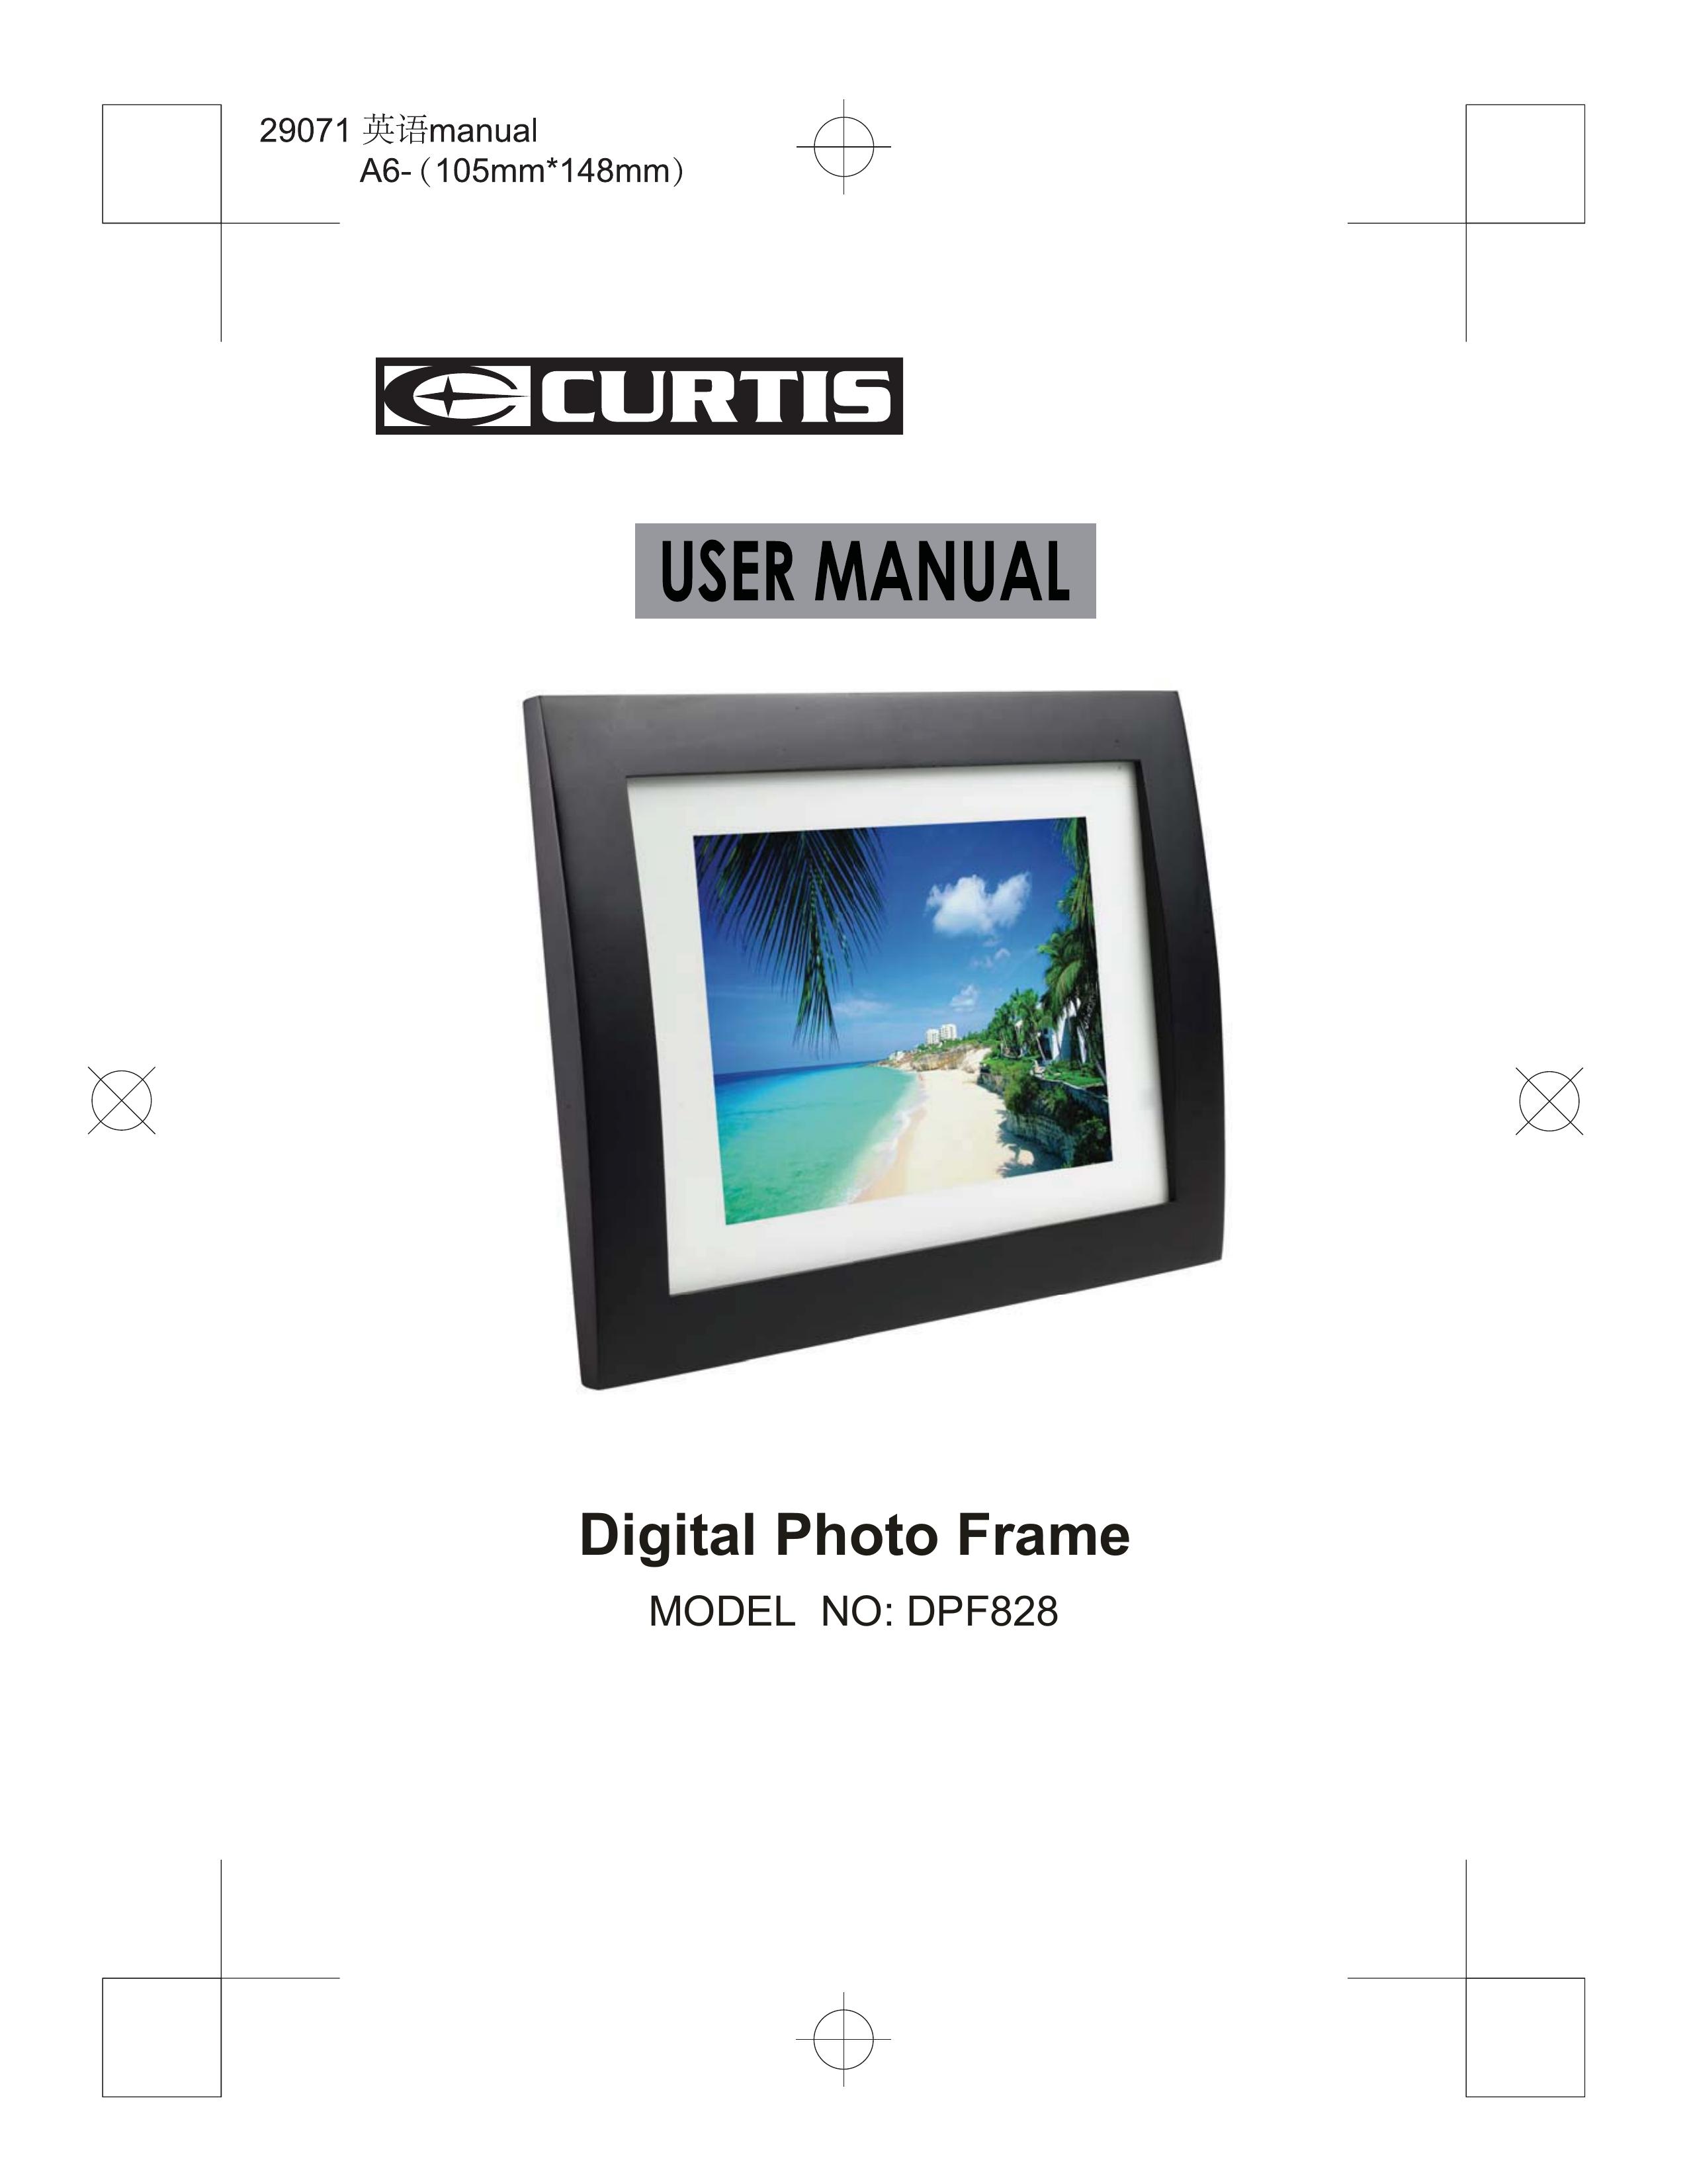 Curtis DPF828 Digital Photo Frame User Manual